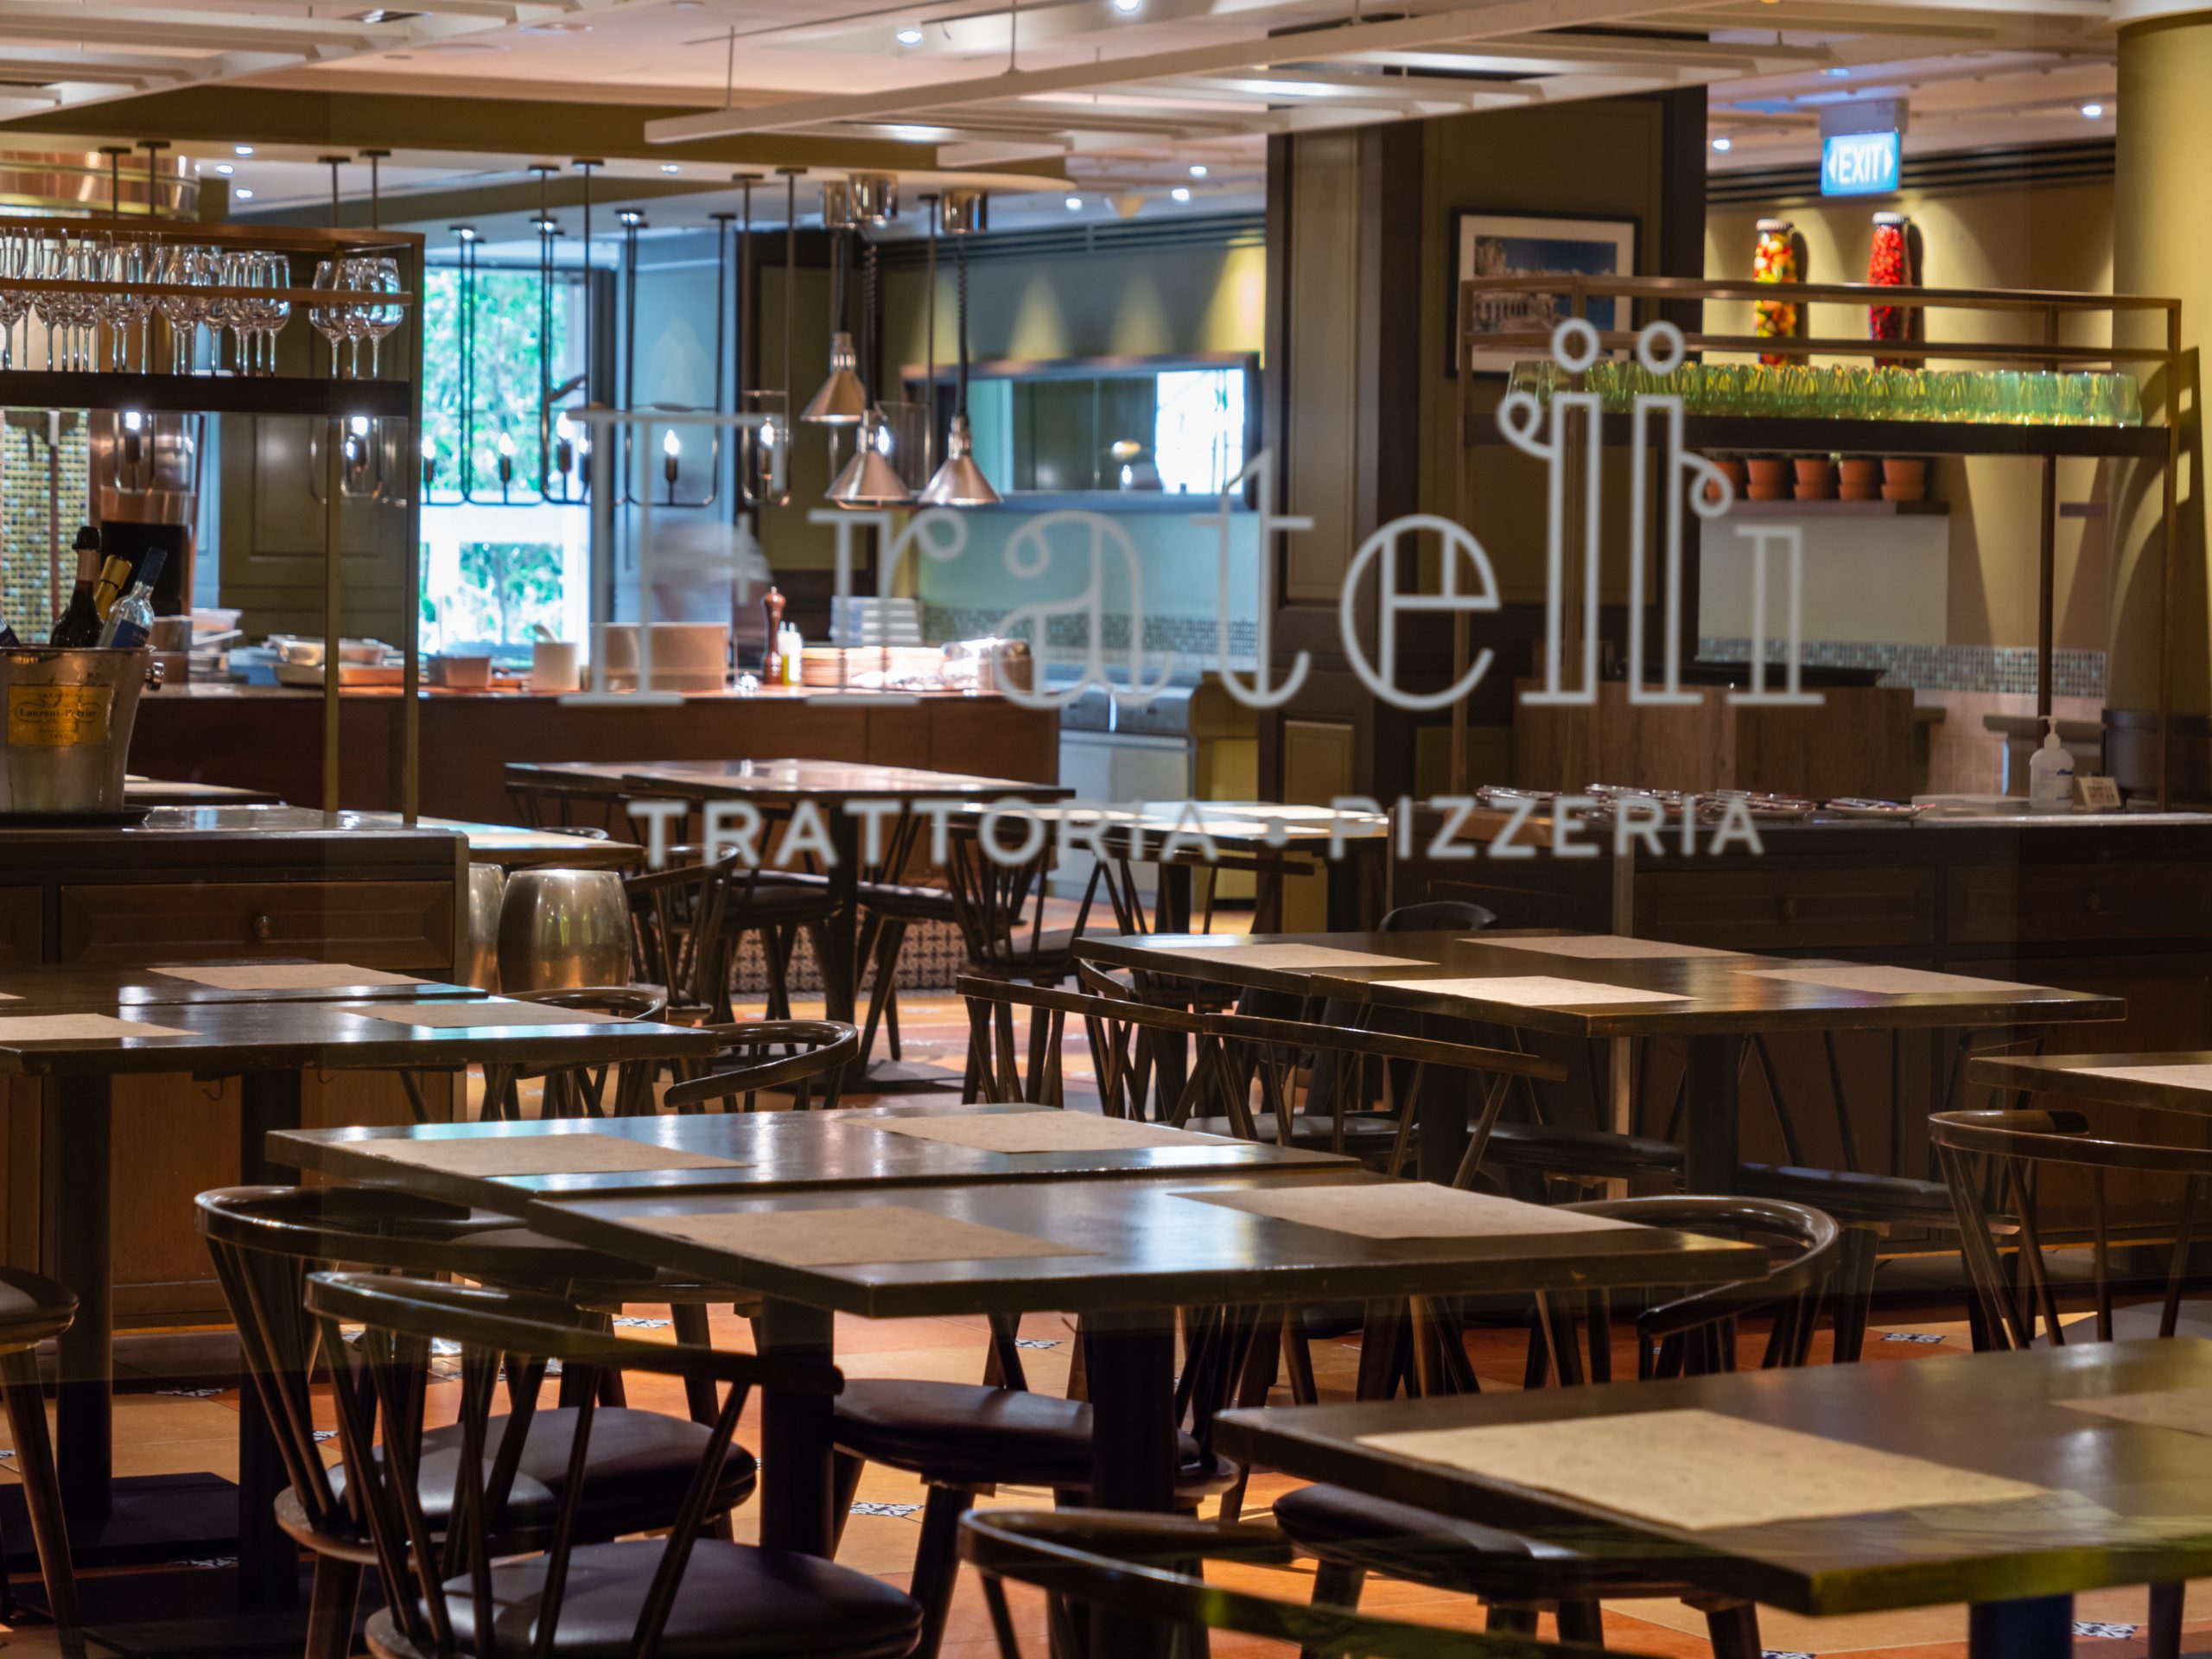 Trattoria Pizzeria, in Resort World Sentosa, Singapore